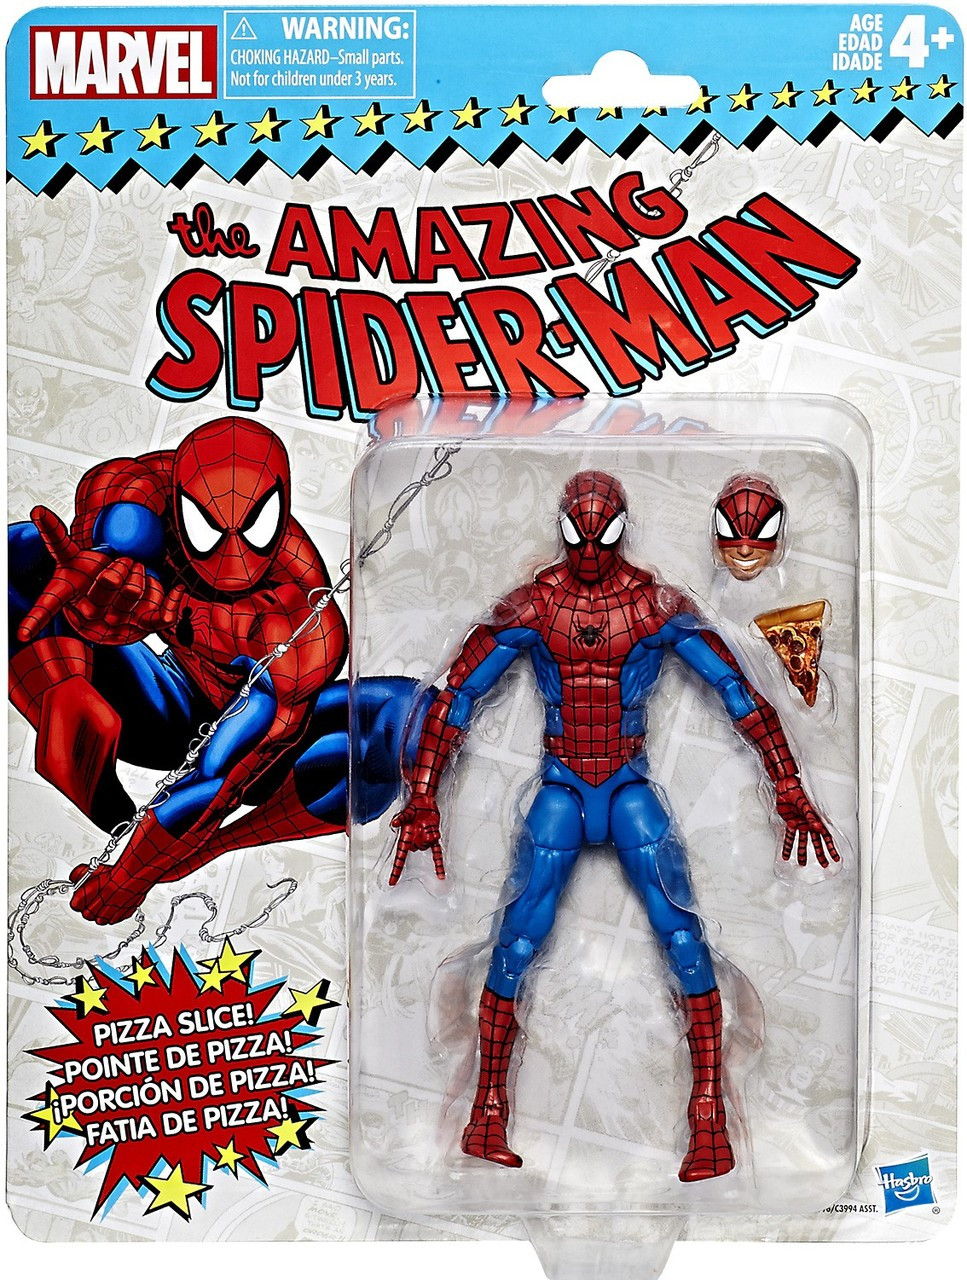 Spider Man Action Figure Marvel Legends - Apixmranr  51642.1503415686